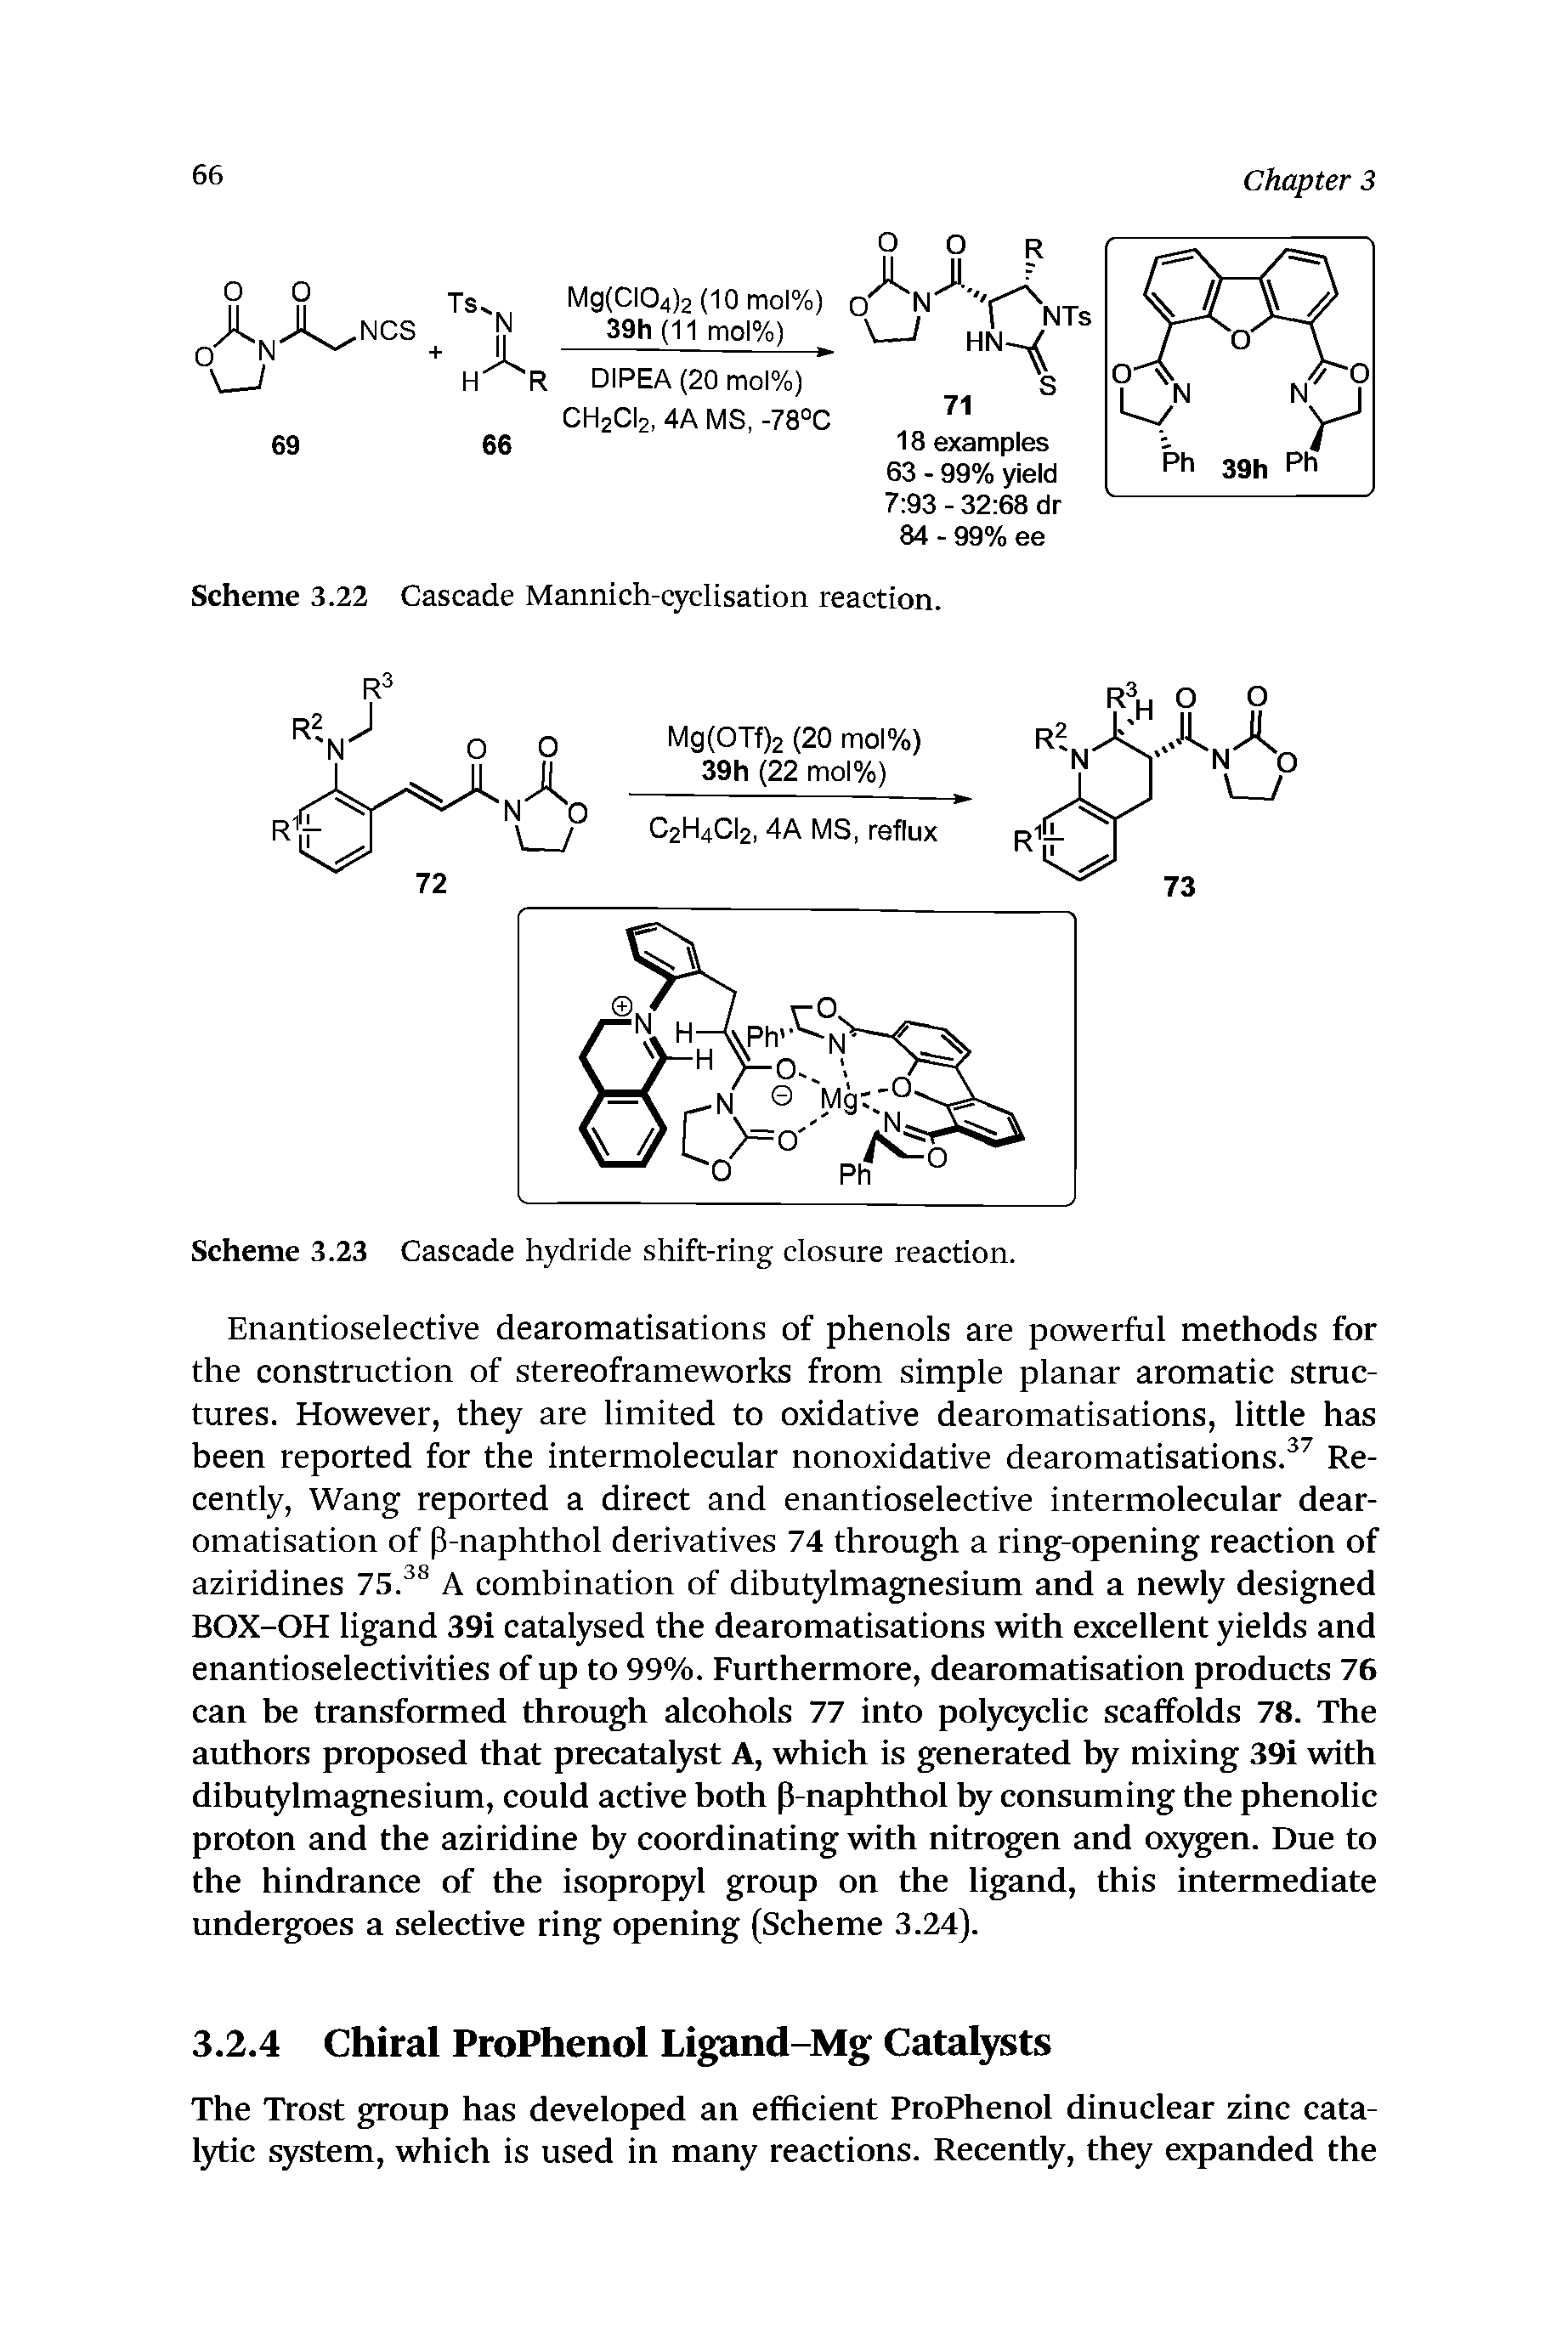 Scheme 3.23 Cascade hydride shift-ring closure reaction.